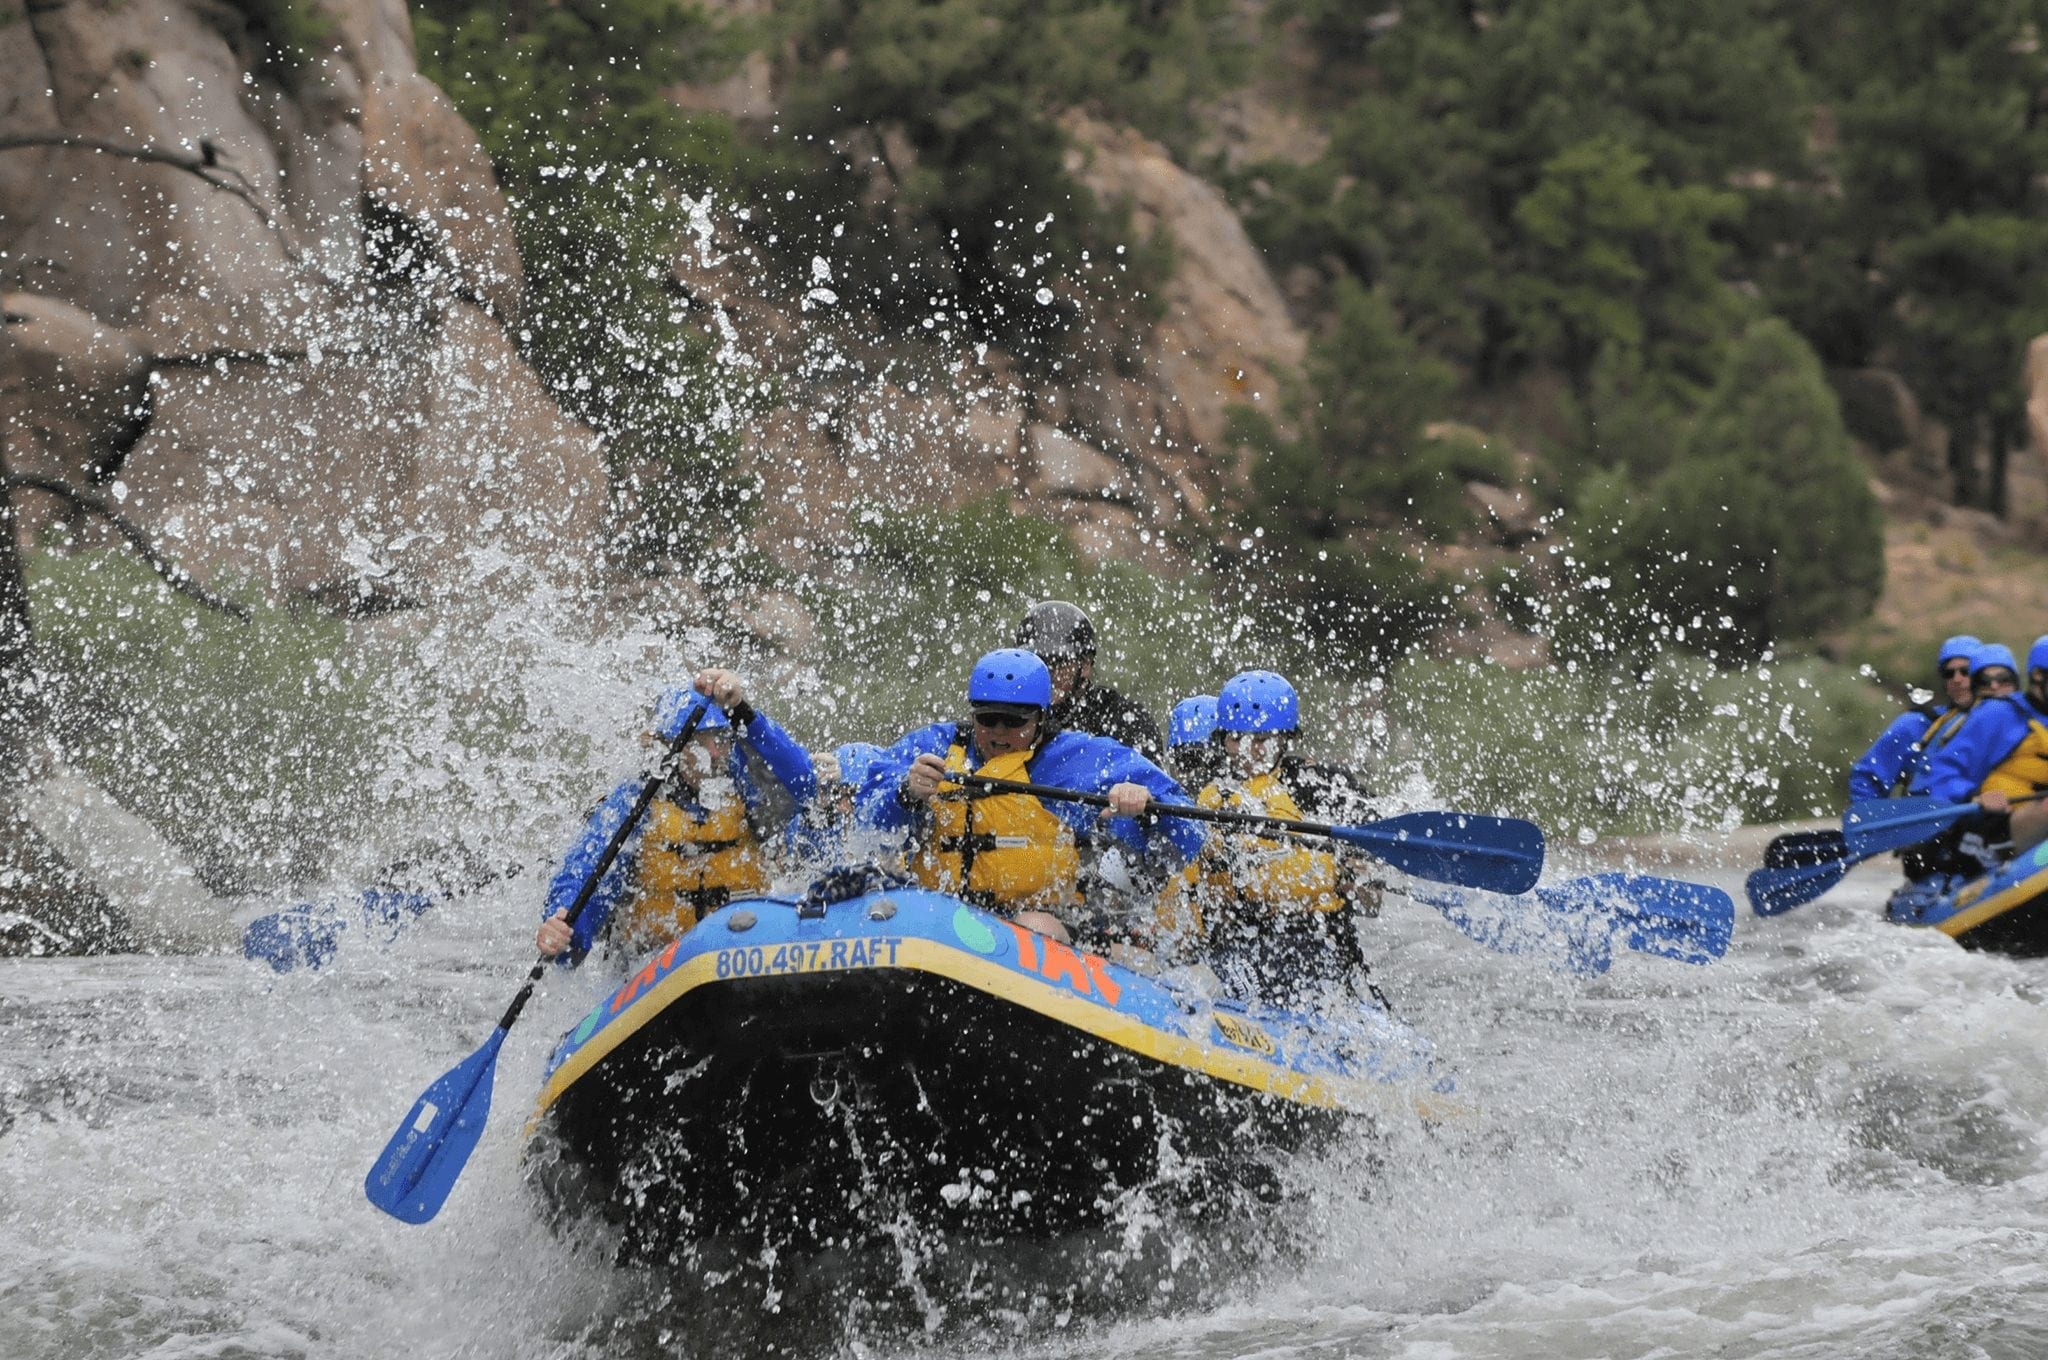 Groups river rafting in Breckenridge, Colorado